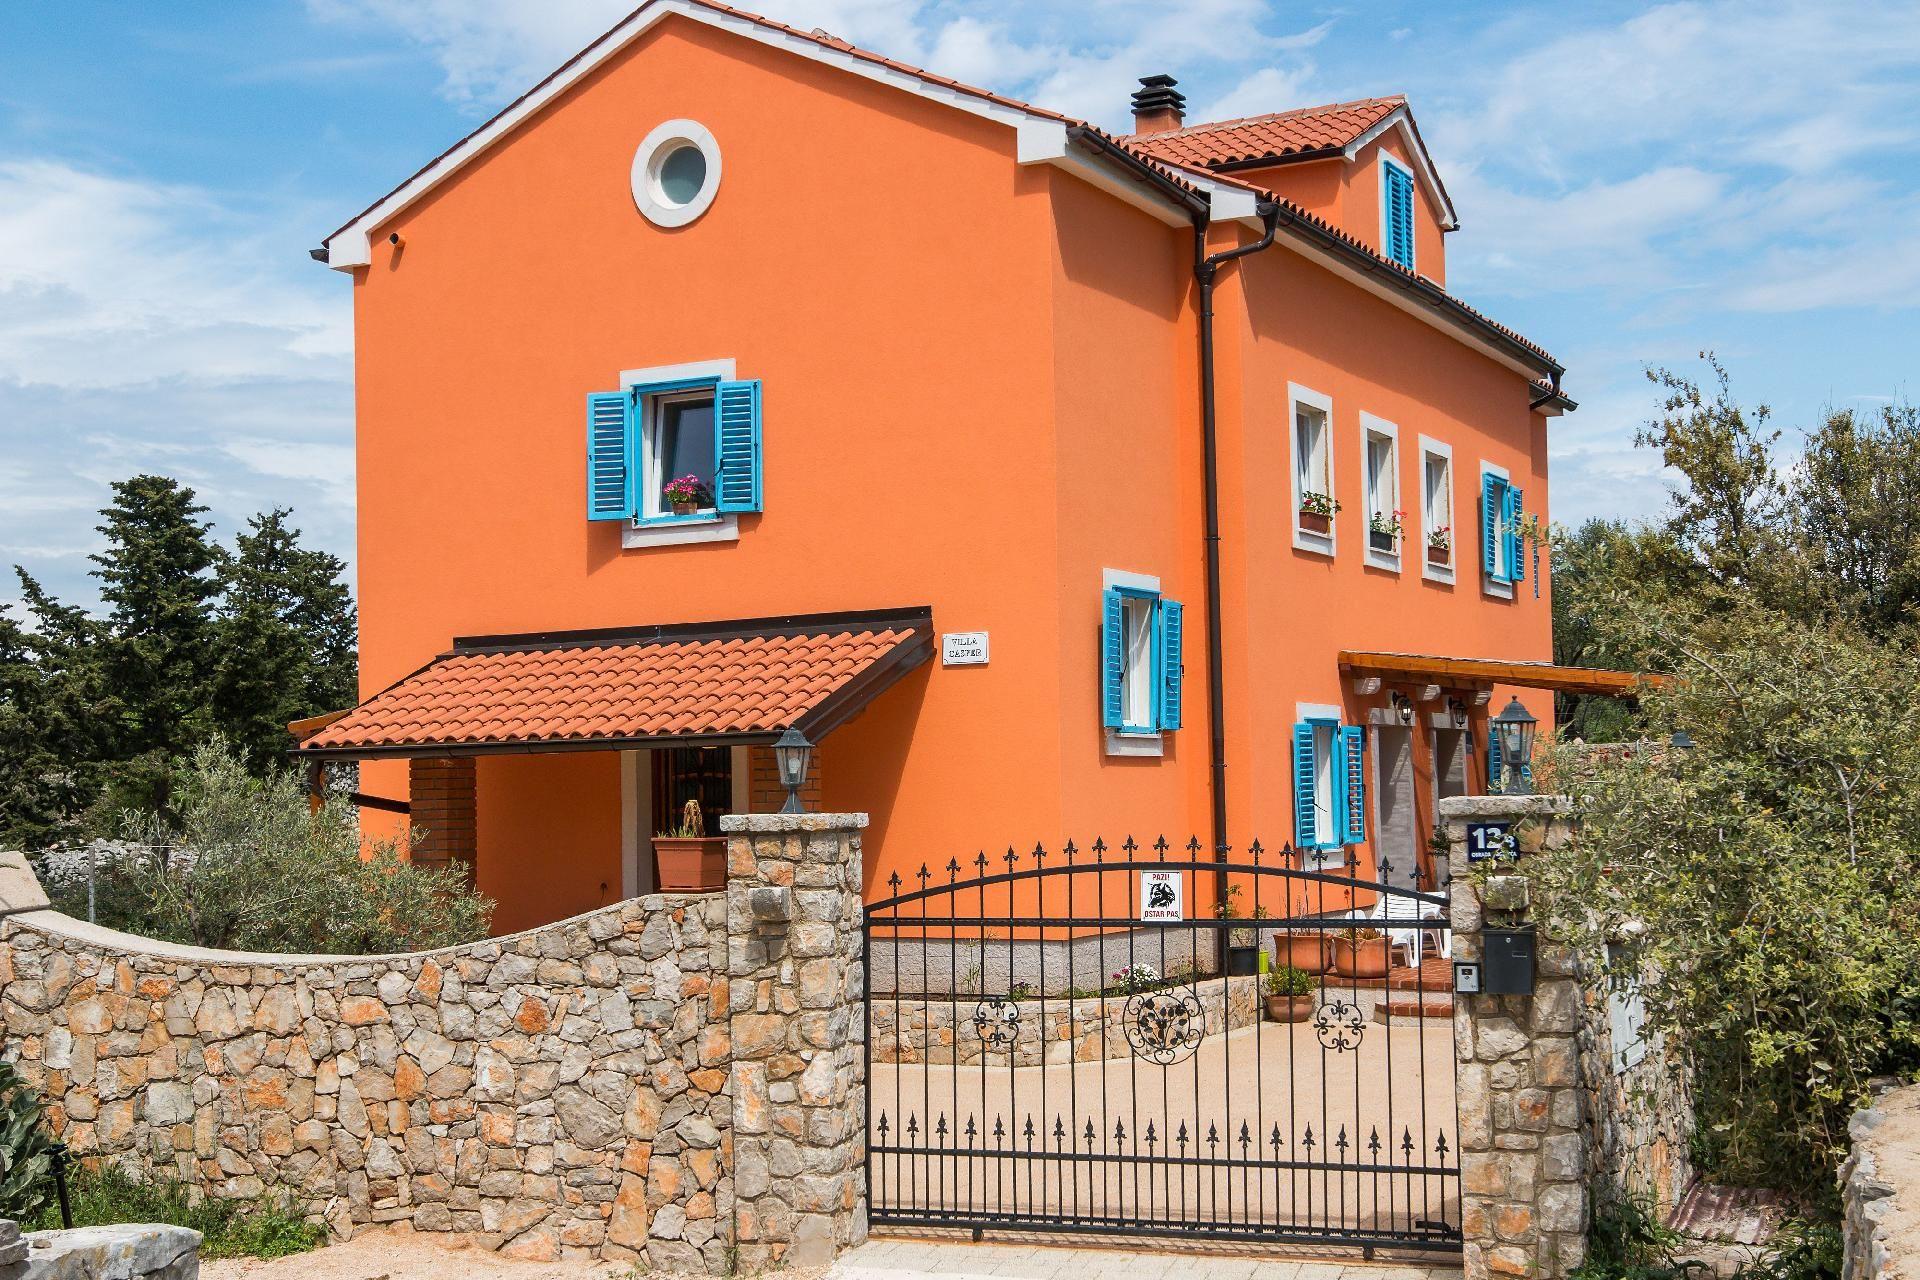 Appartement in Veli Lo?inj mit Terrasse, Garten un Ferienhaus in Kroatien